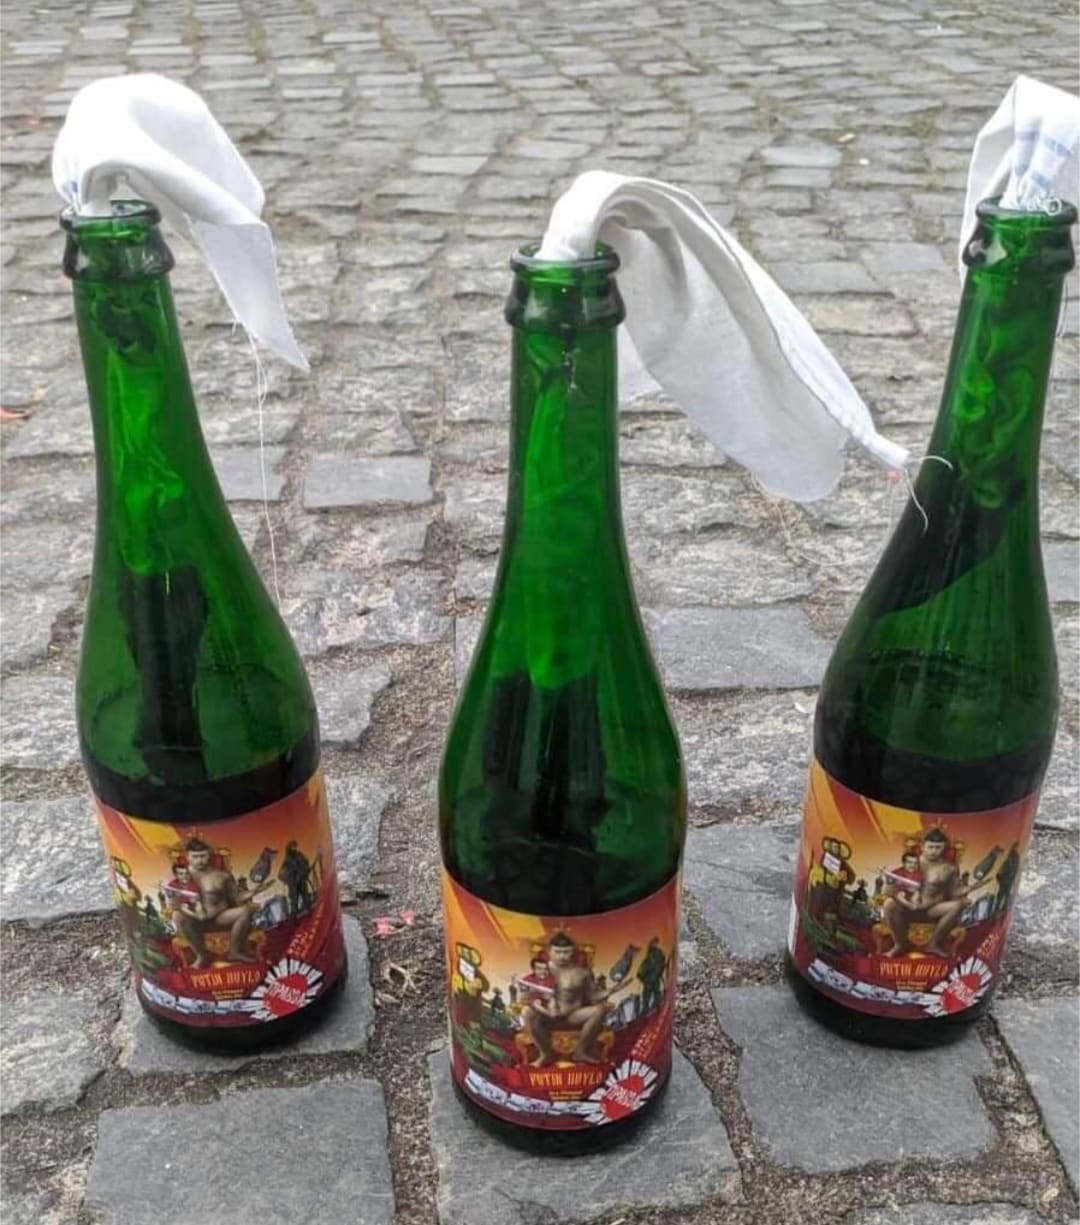 Pravda Brewery in Ukraine distributing these now